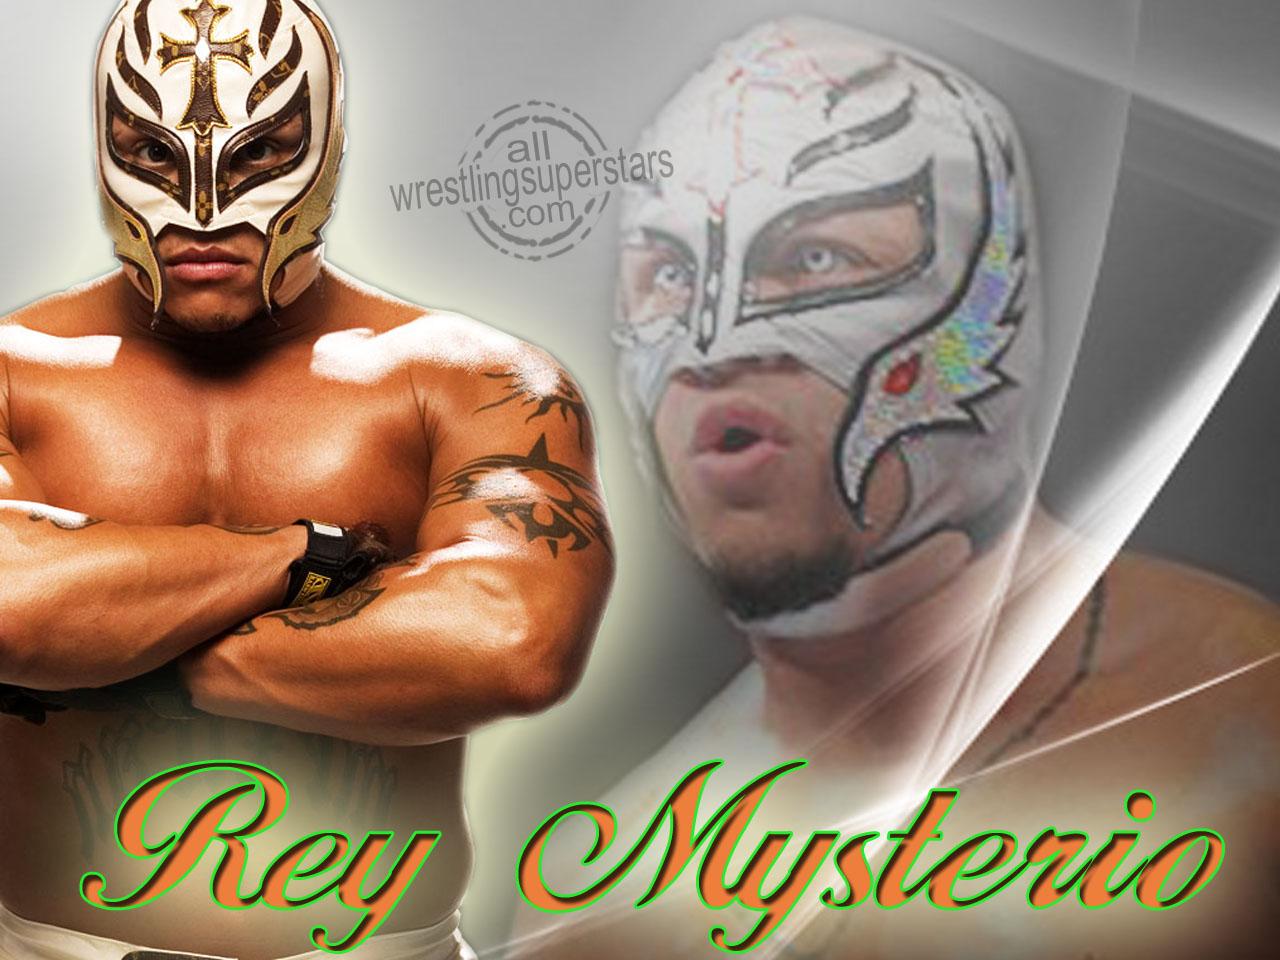 Wwe Superstar Rey Mysterio - HD Wallpaper 